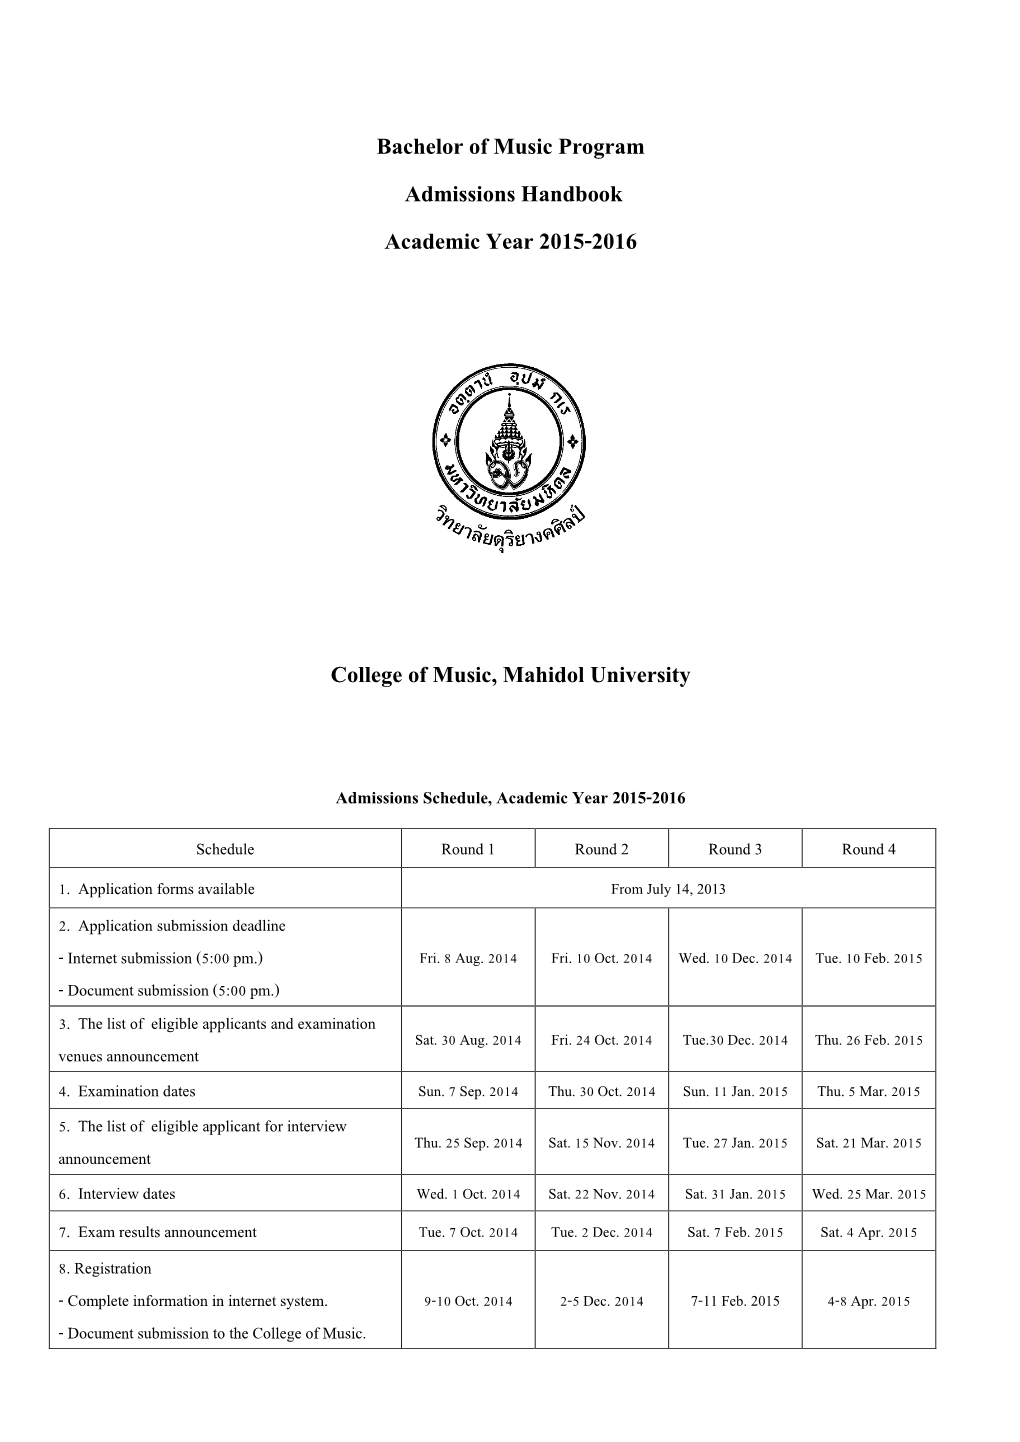 Bachelor of Music Program Admissions Handbook Academic Year 2015-2016